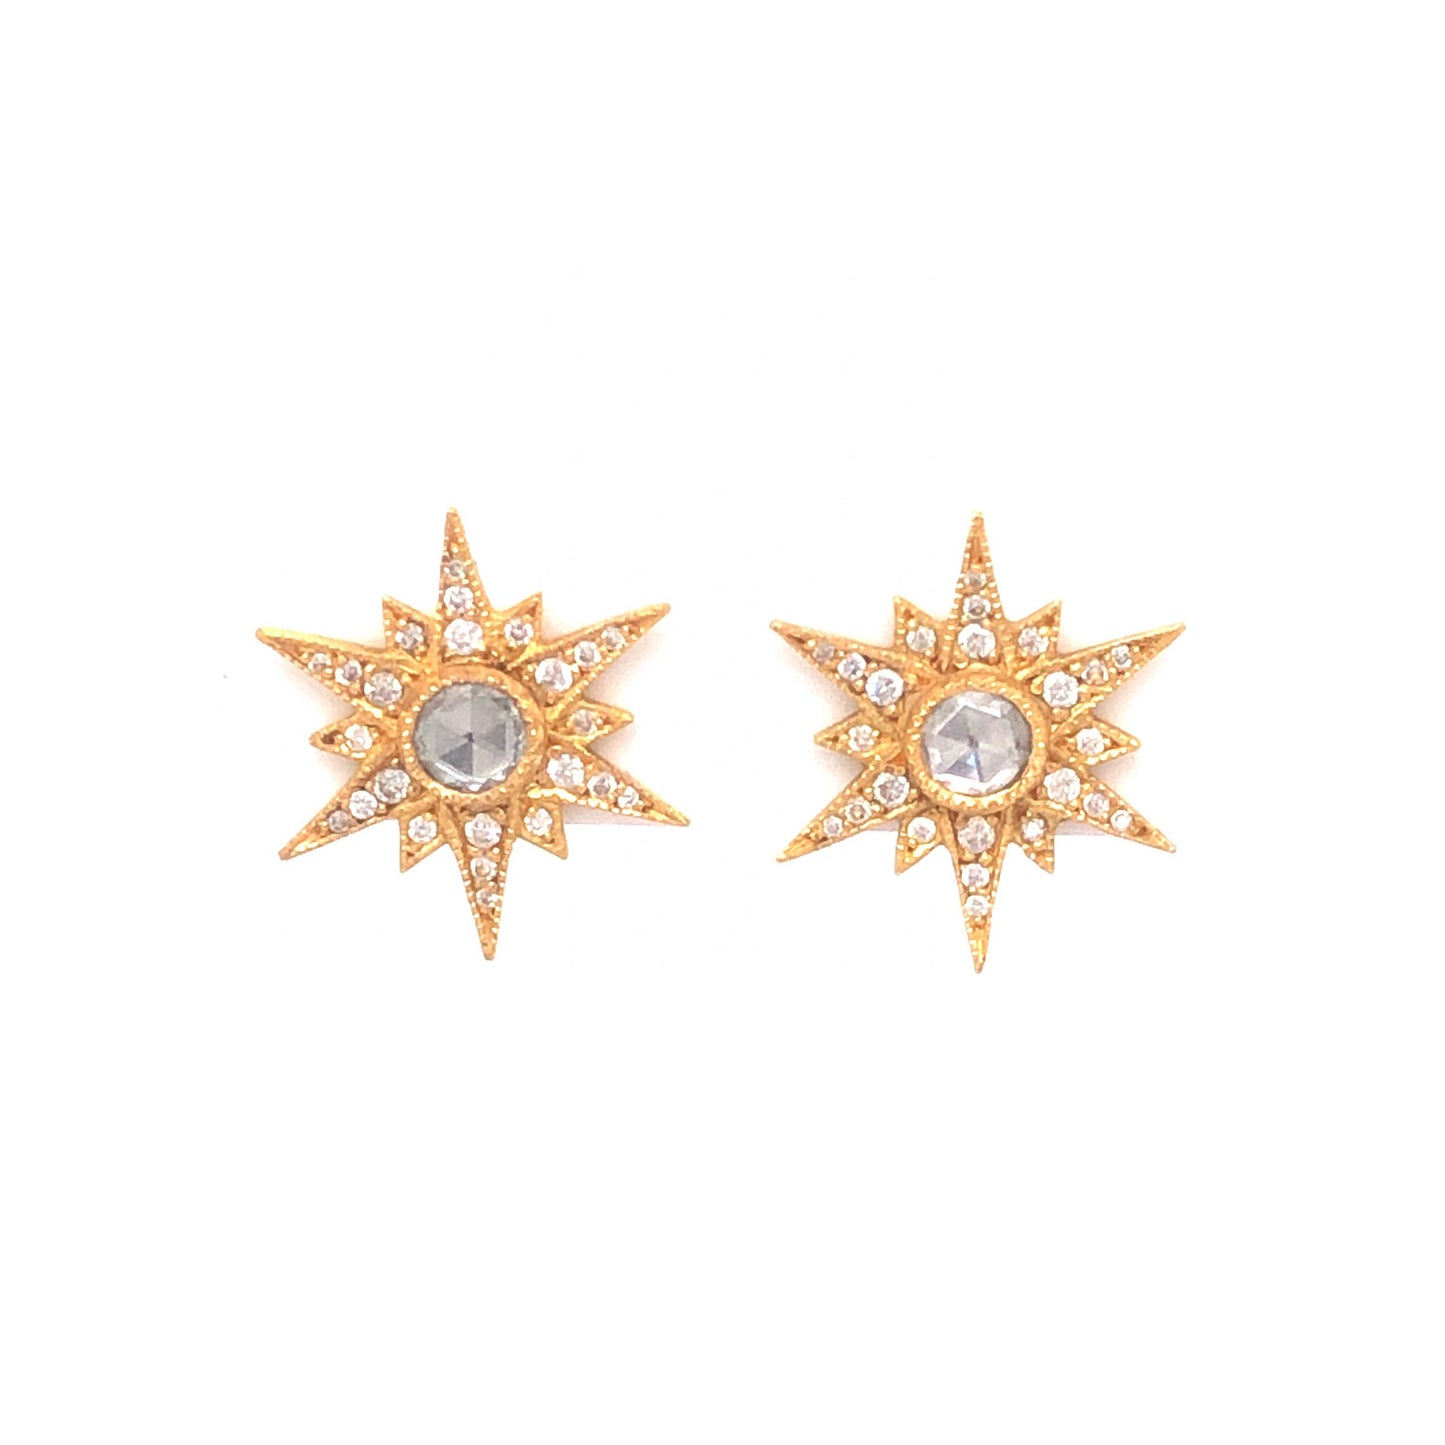 Arman Sarkisyan Diamond Starburst Earrings in 22K Yellow Gold